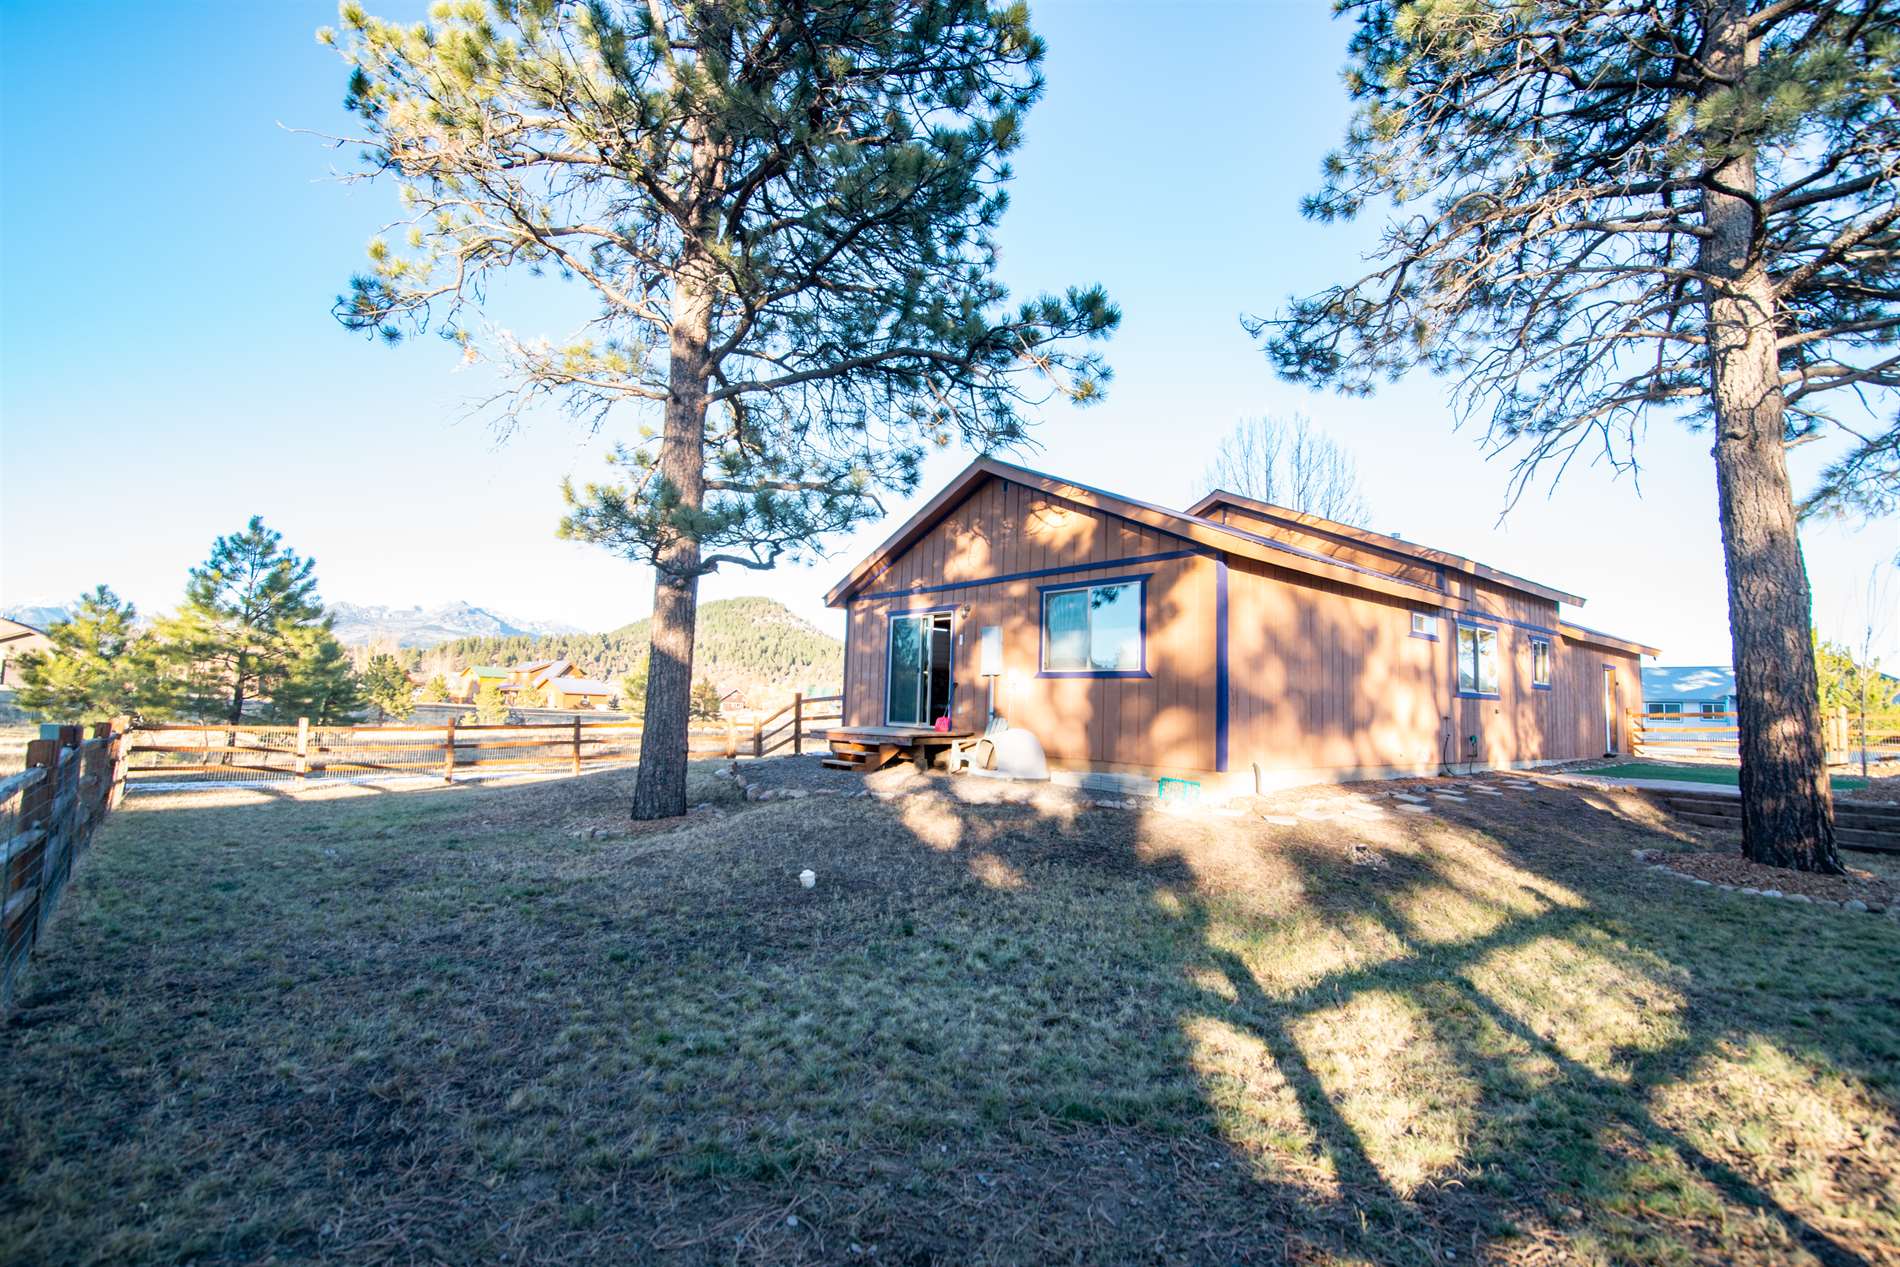 Mountain View Villa, #455 Saturn - ST, Pagosa Springs, CO 81147